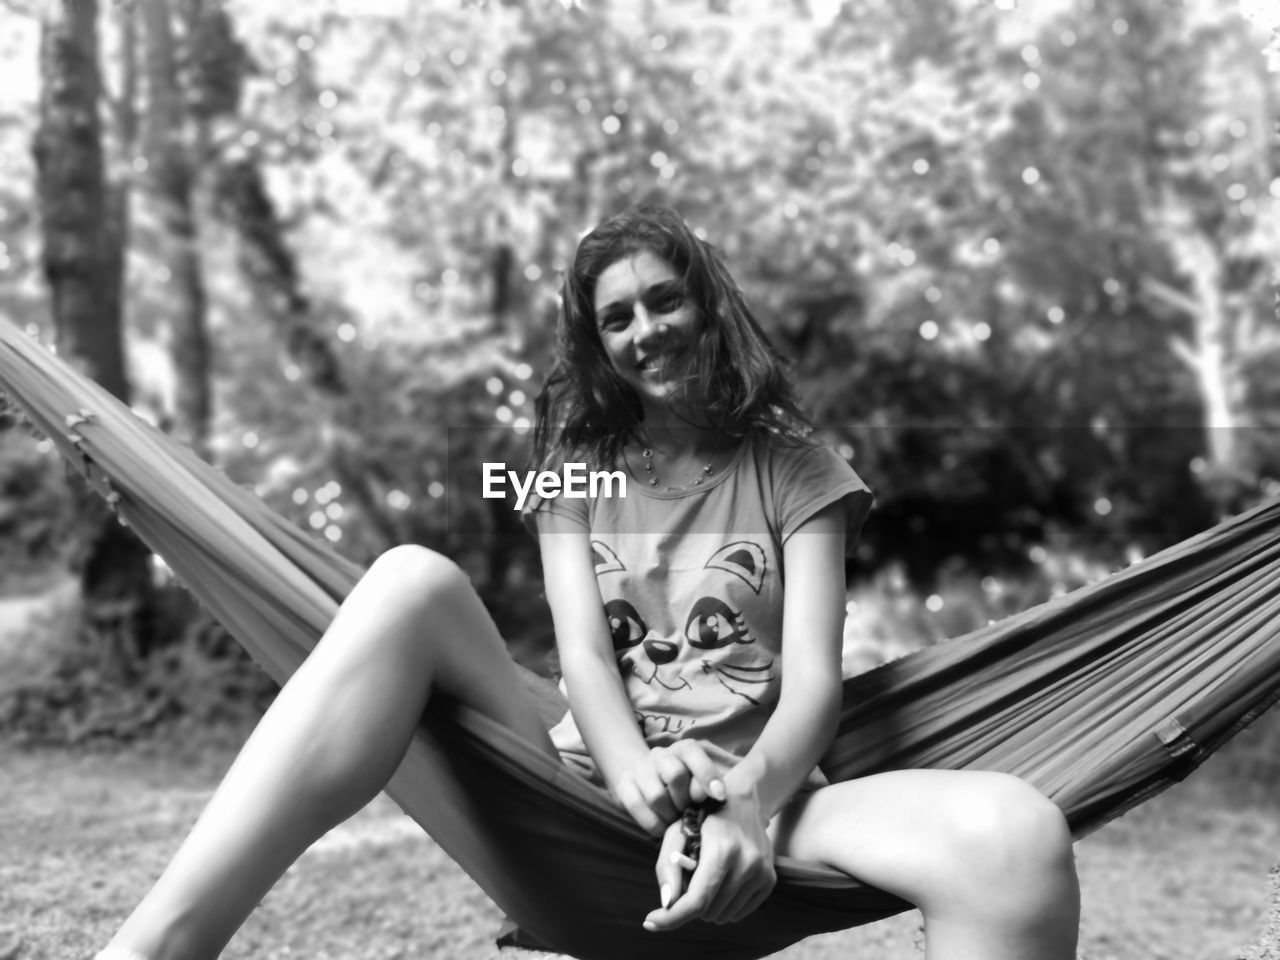 Portrait of woman sitting on hammock outdoors